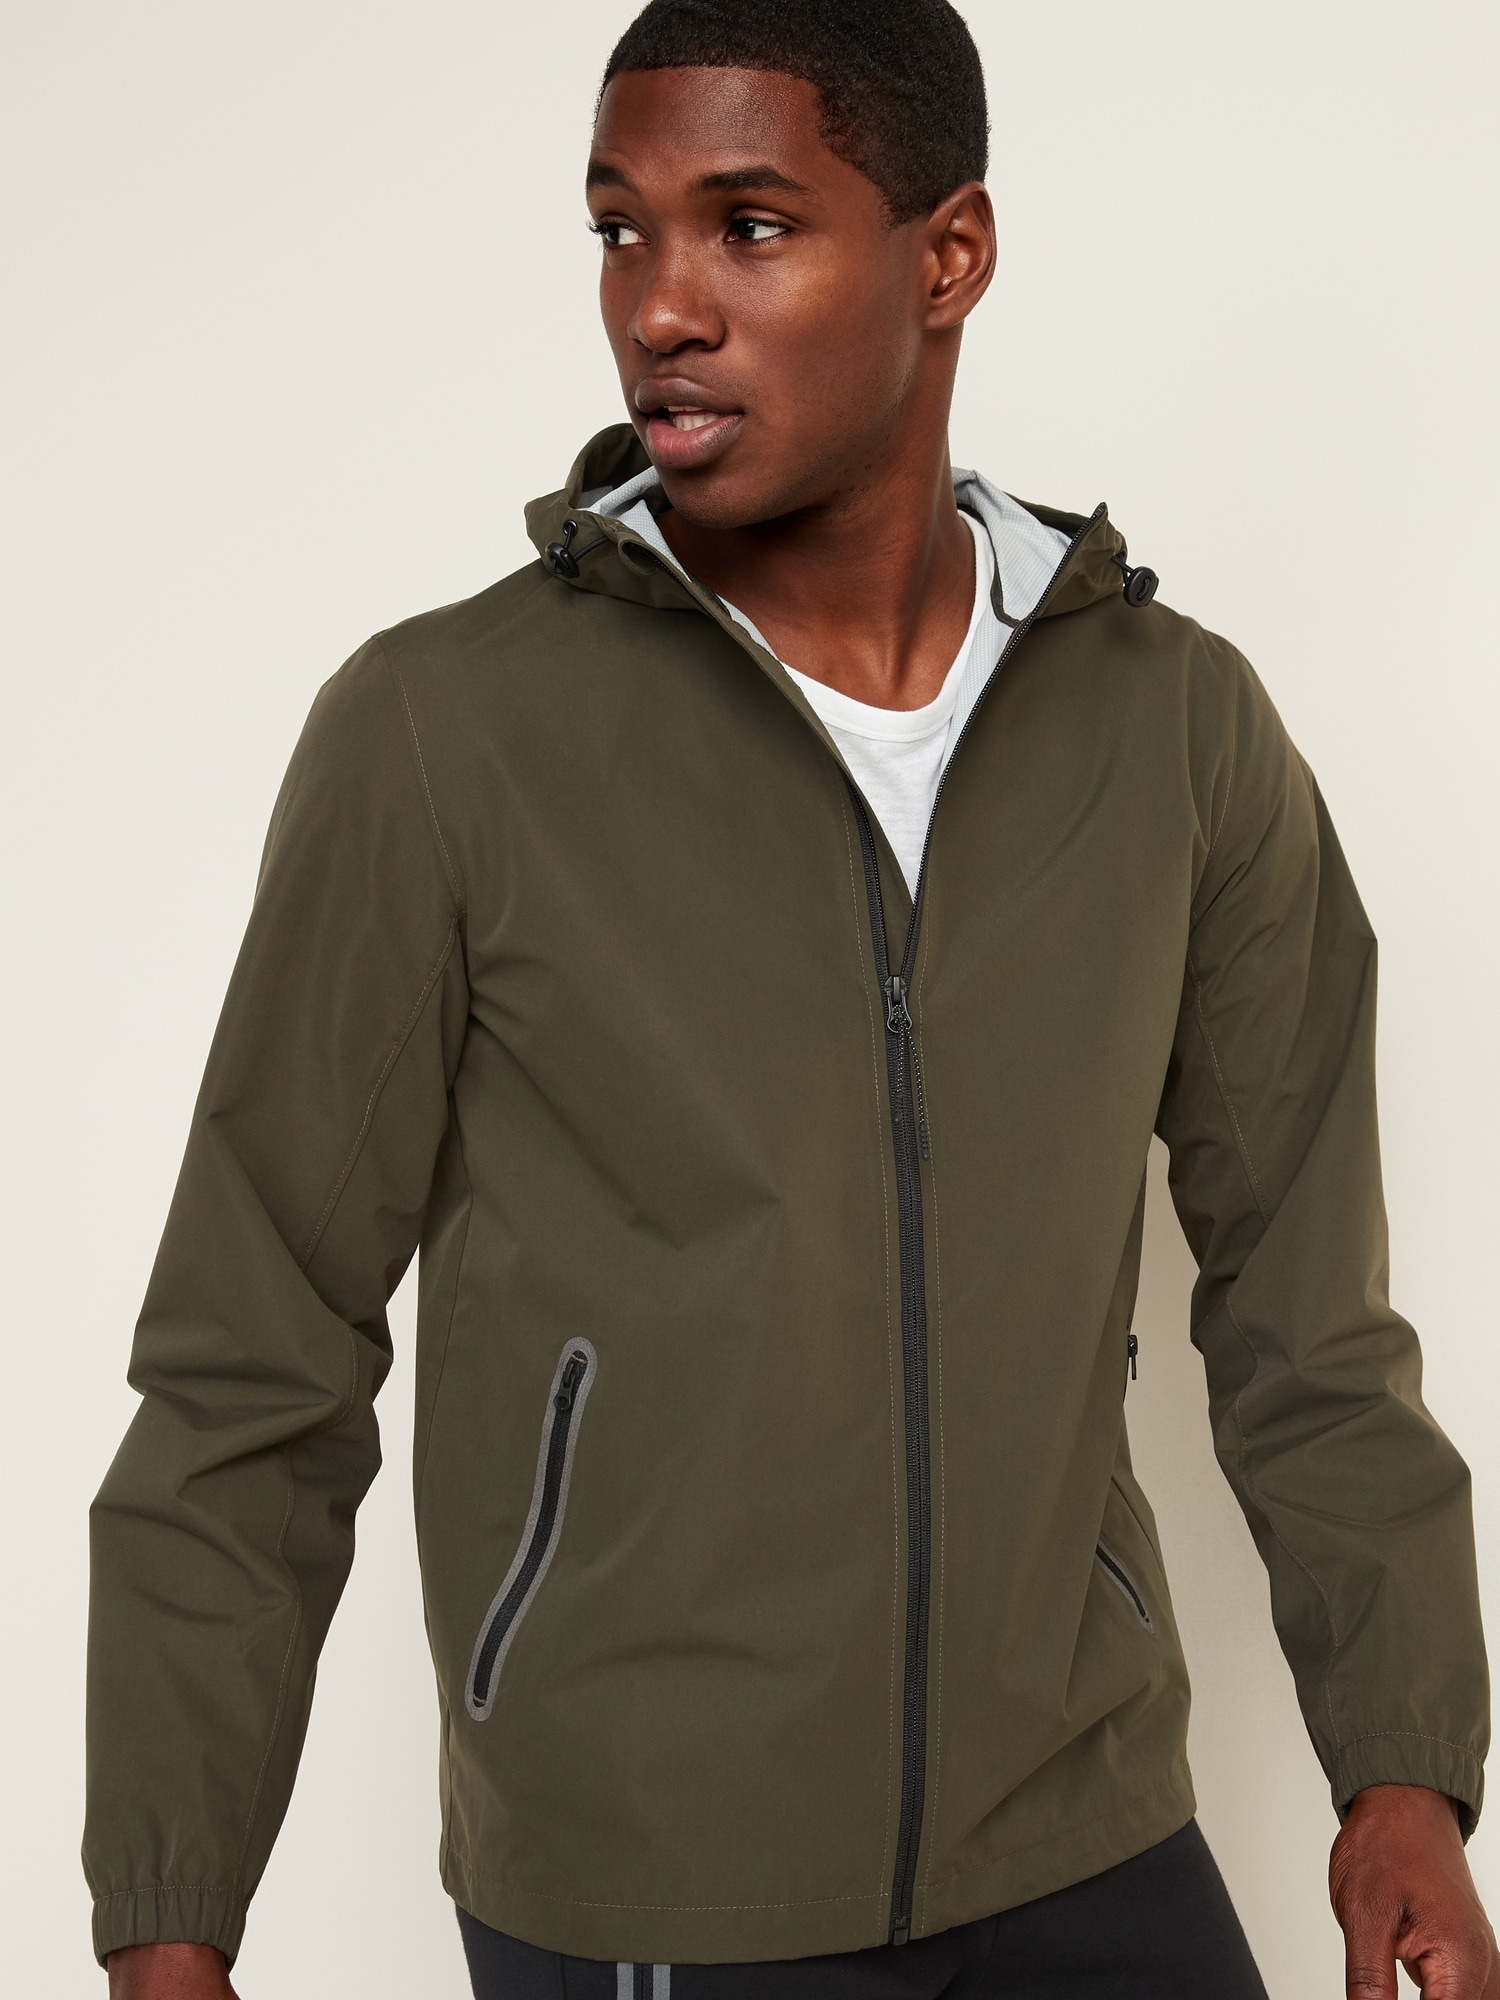 Go-H20 Water-Resistant Hooded Rain Jacket for Men